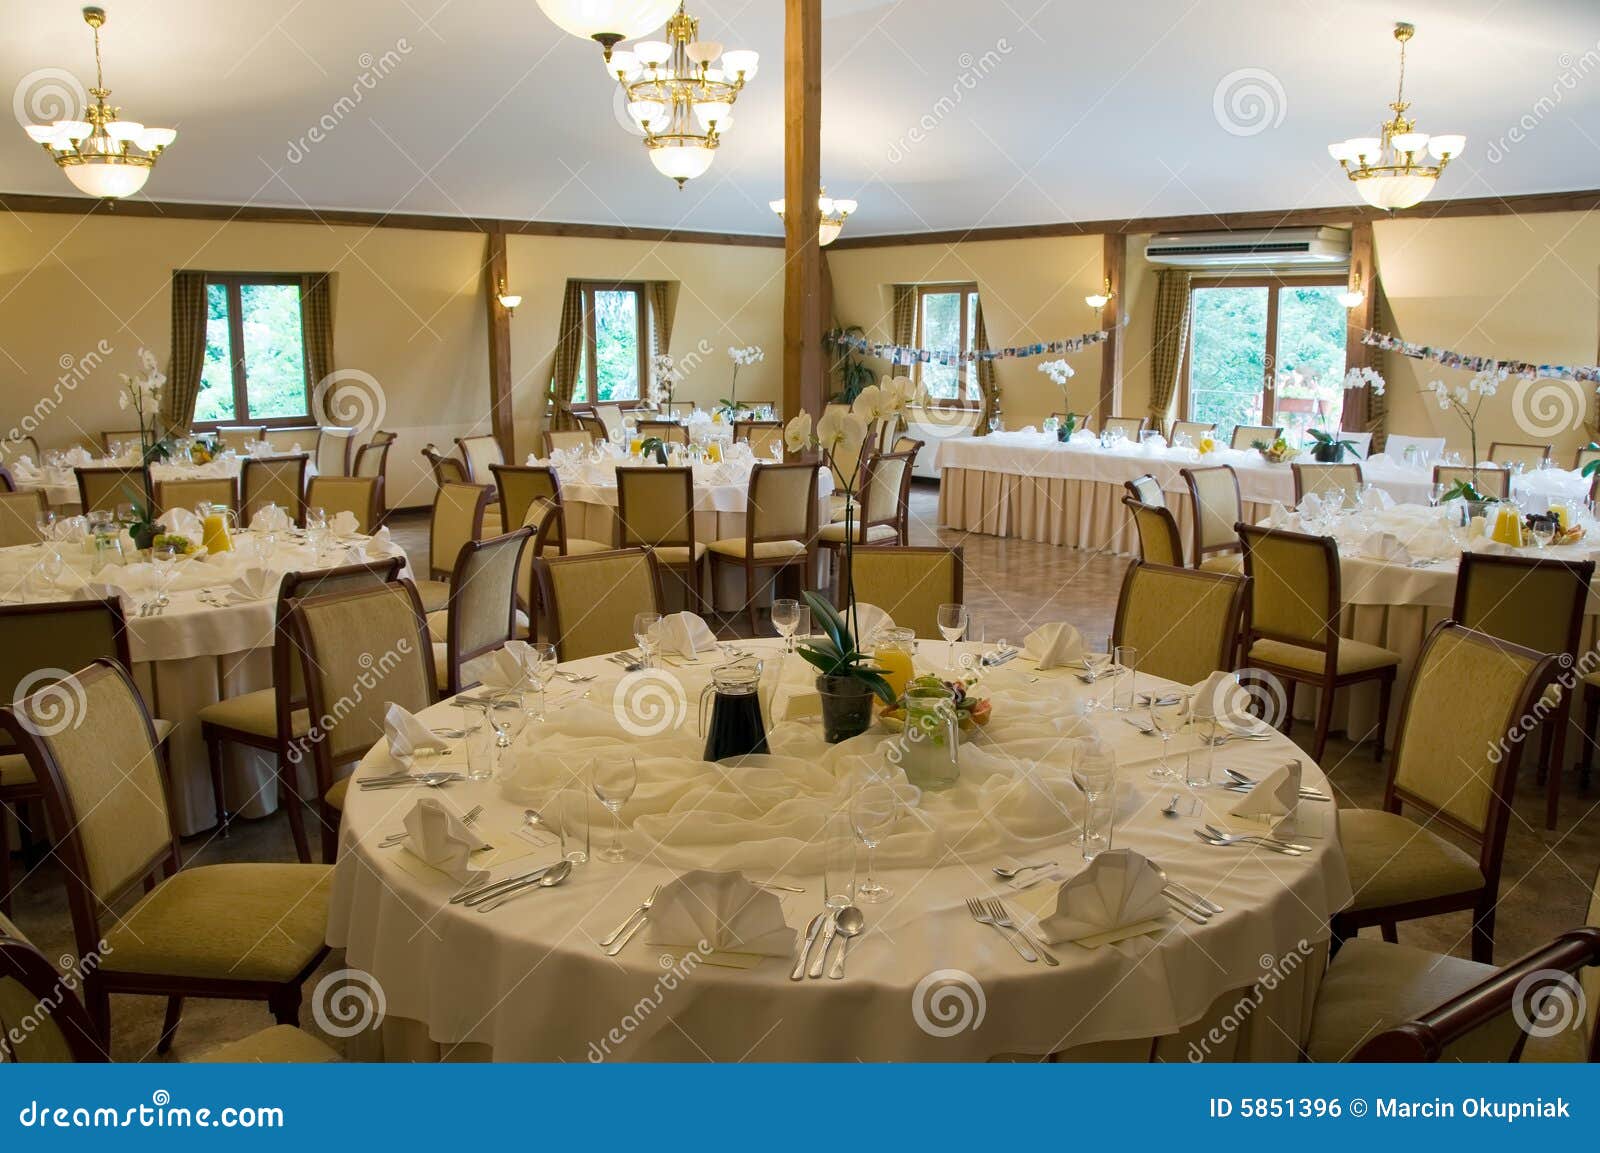 round banquet tables